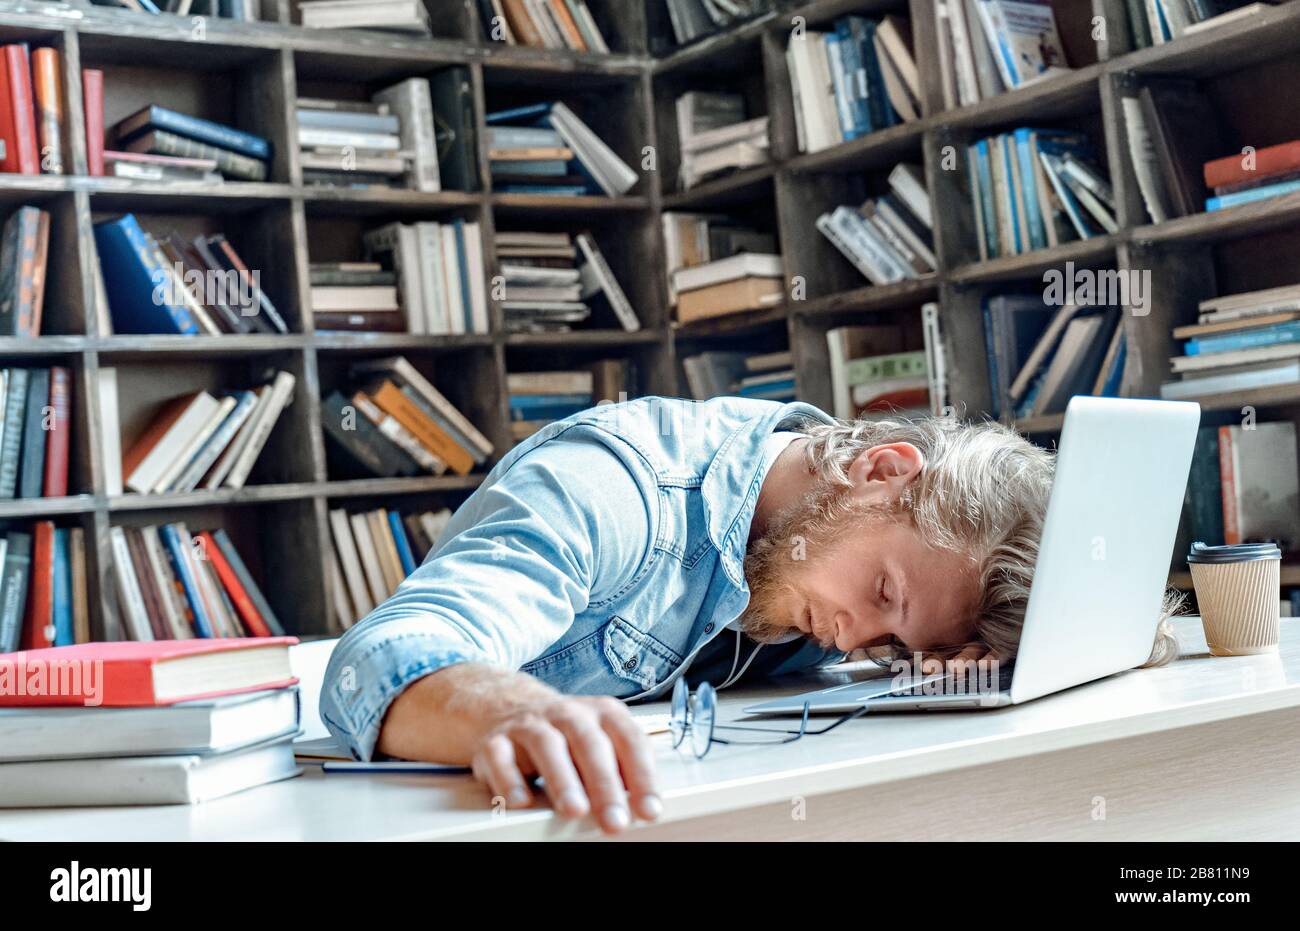 Funny tired sleepy university student sleeping sitting at library desk  Stock Photo - Alamy